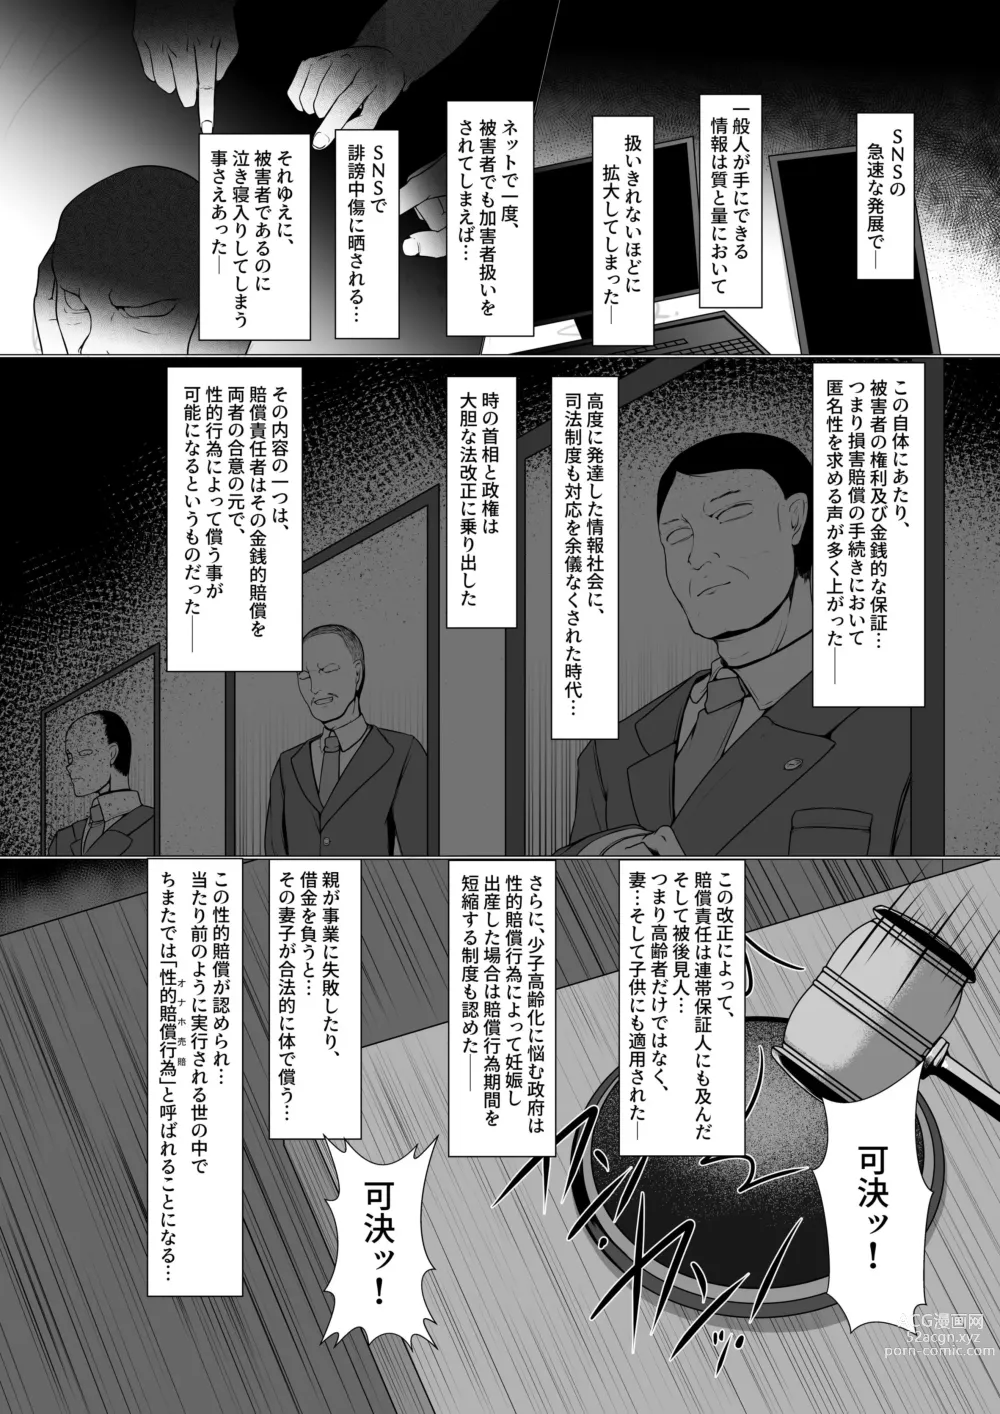 Page 6 of doujinshi Onaho Baiuri Shachou Reijou Onahole no Maki